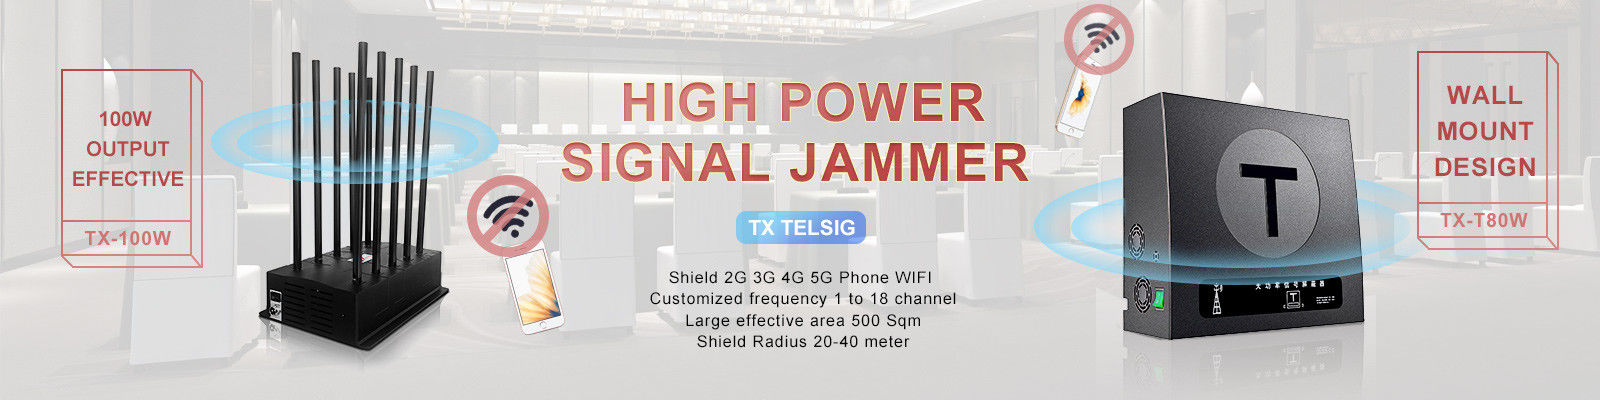 High Power Mobile Phone Jammer